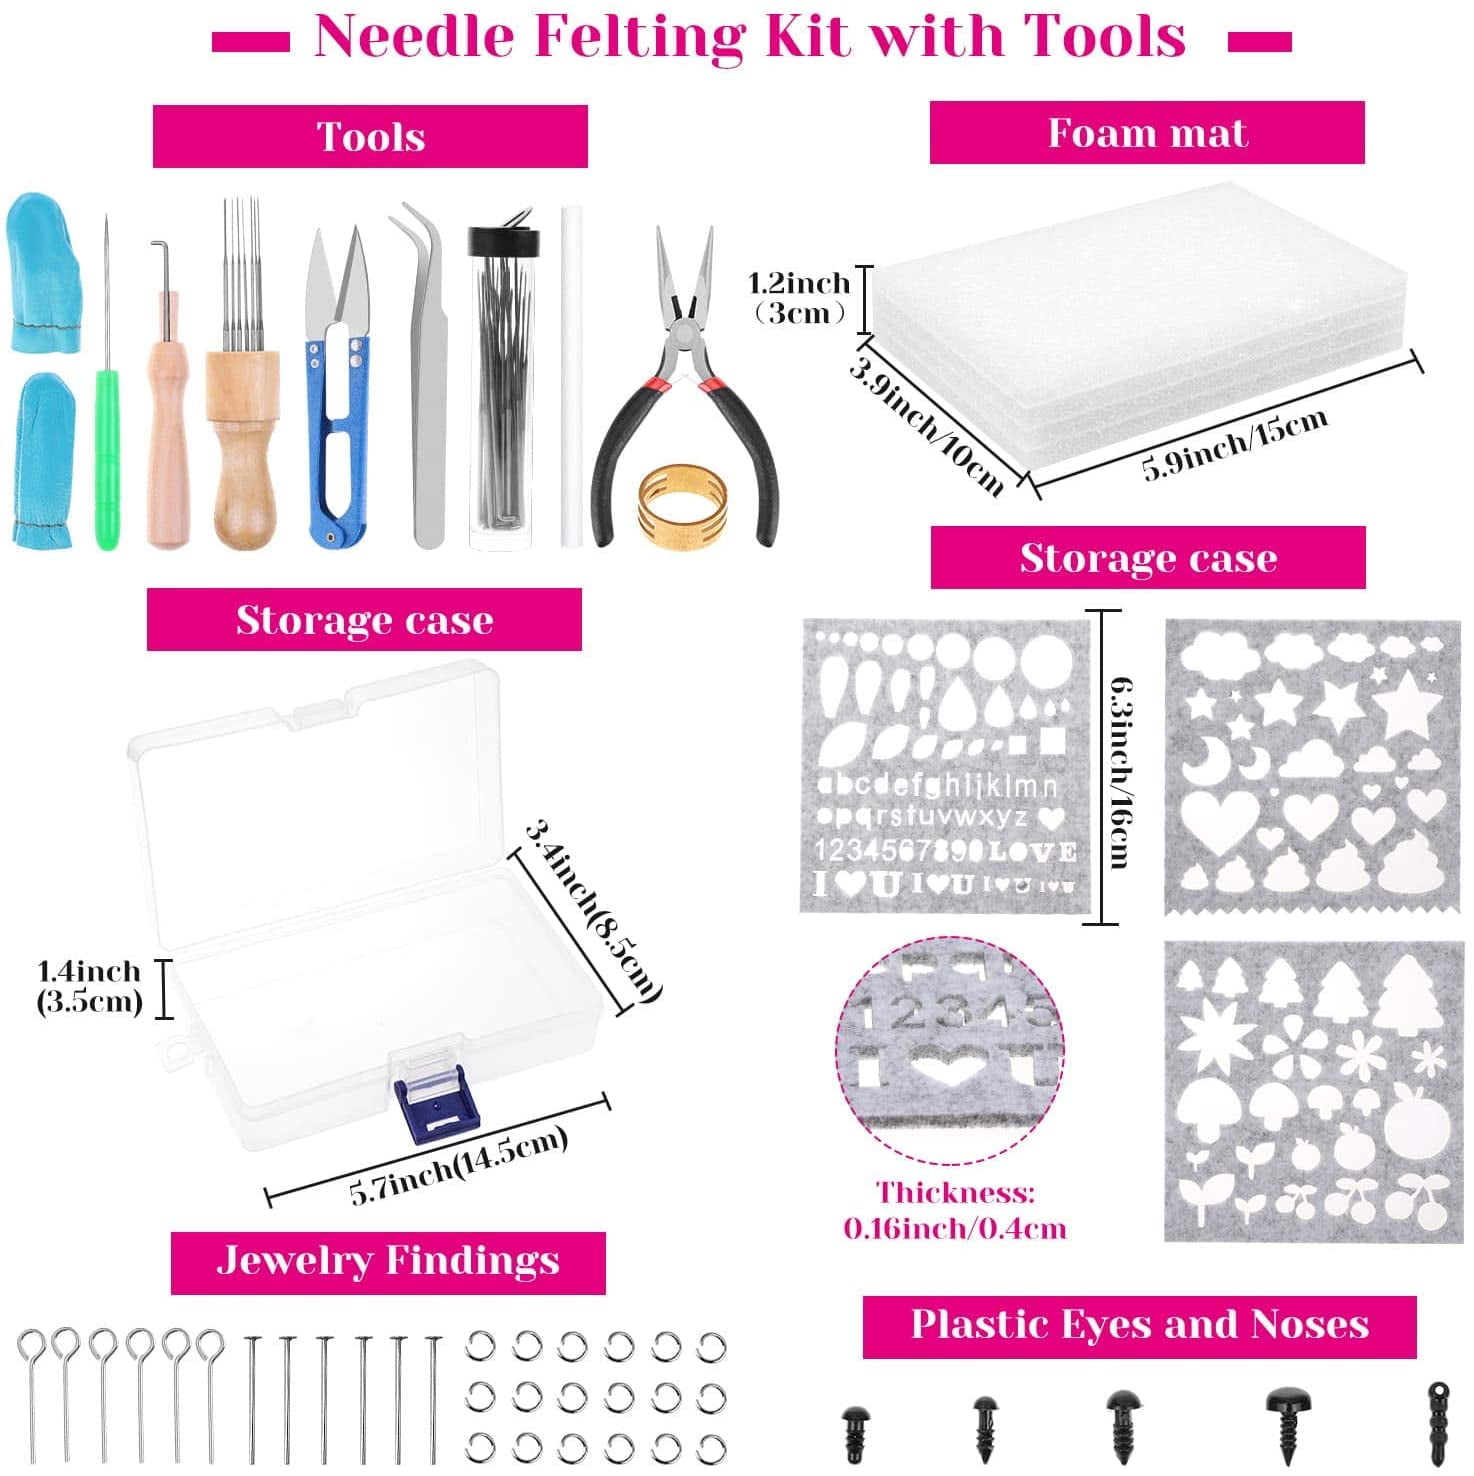 Needle Felting Kit Shynek 460 Pack Needle Felting Supplies Kit Includes 50 Colors Wool Roving and Felt Needles Tools for Beginners